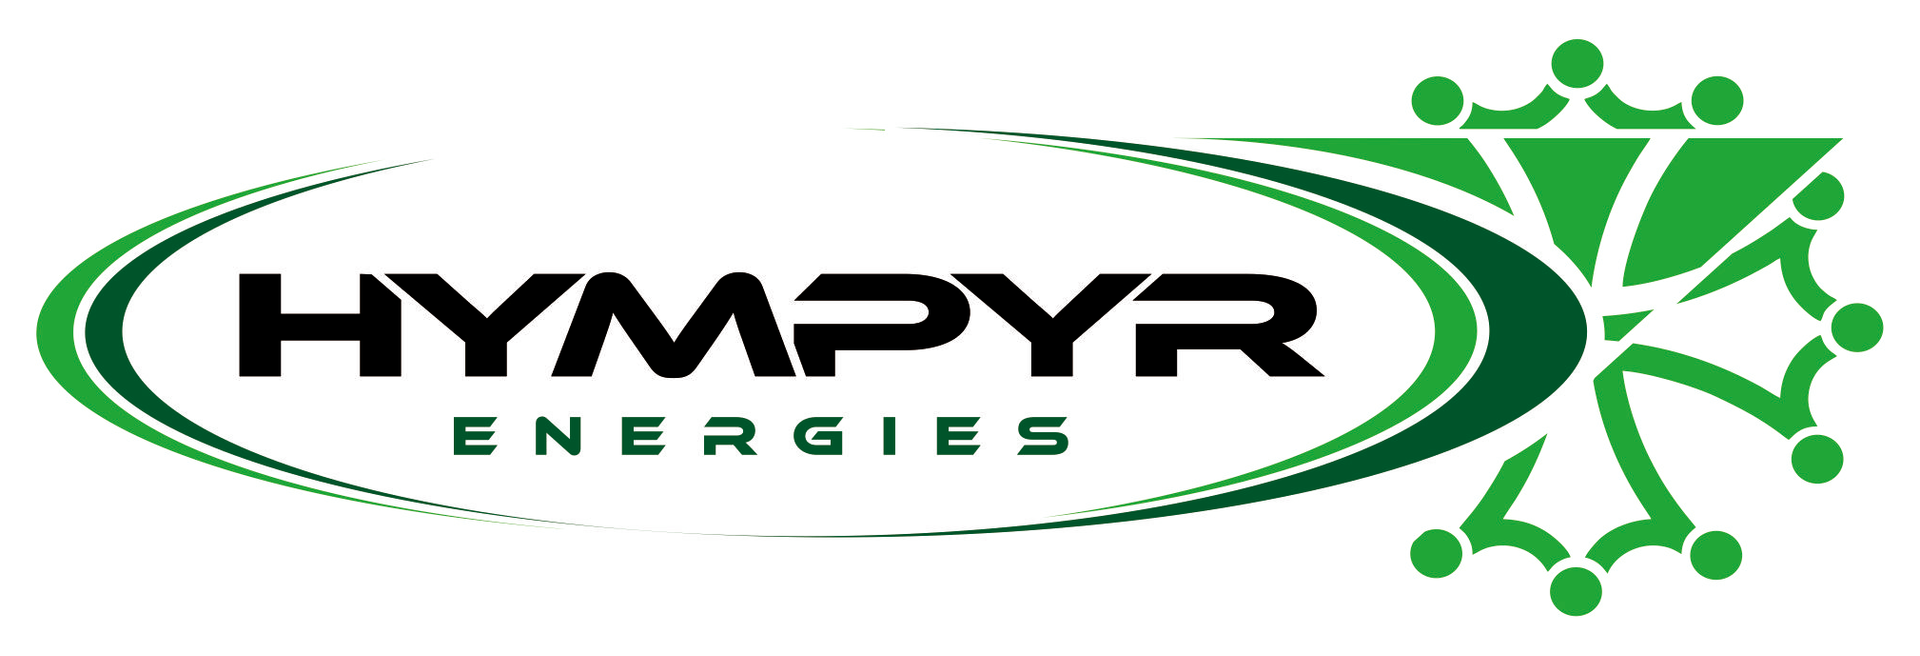 Logo de l'entreprise HYMPYR tablette